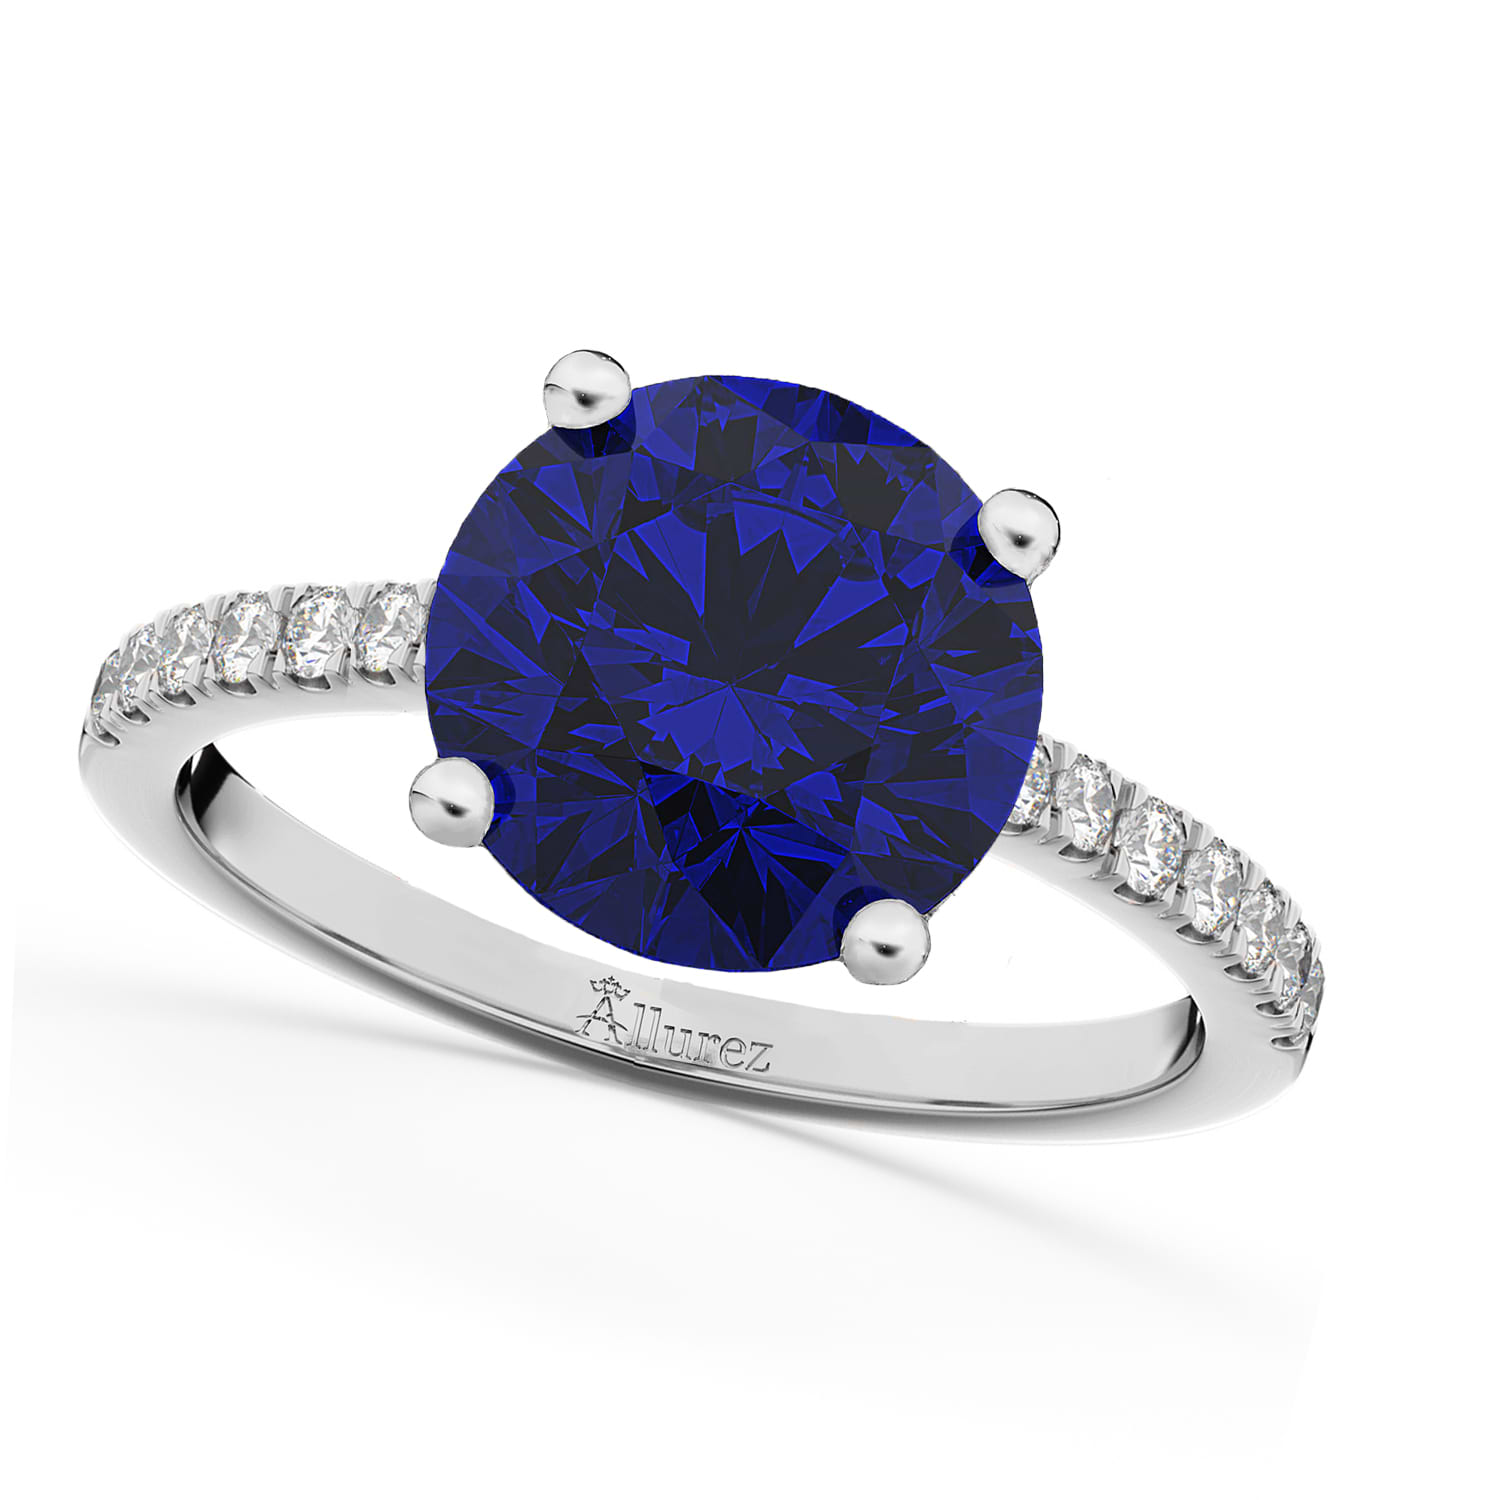 Blue Sapphire & Diamond Engagement Ring 14K White Gold 2.51ct